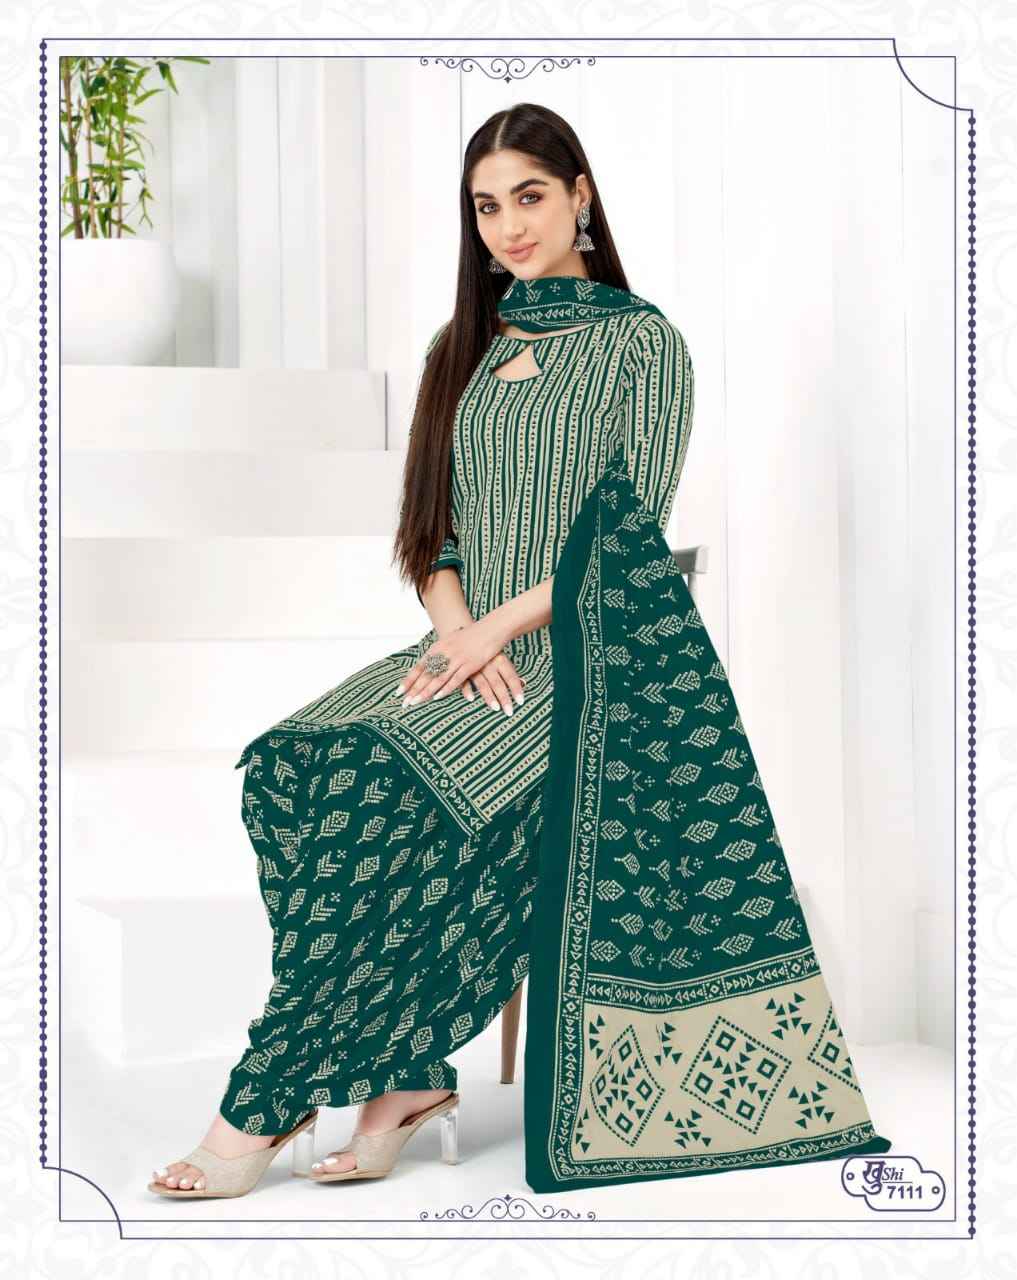 Mayur Khushi Vol-71 Cotton Dress Material (35 Pc Catalog)